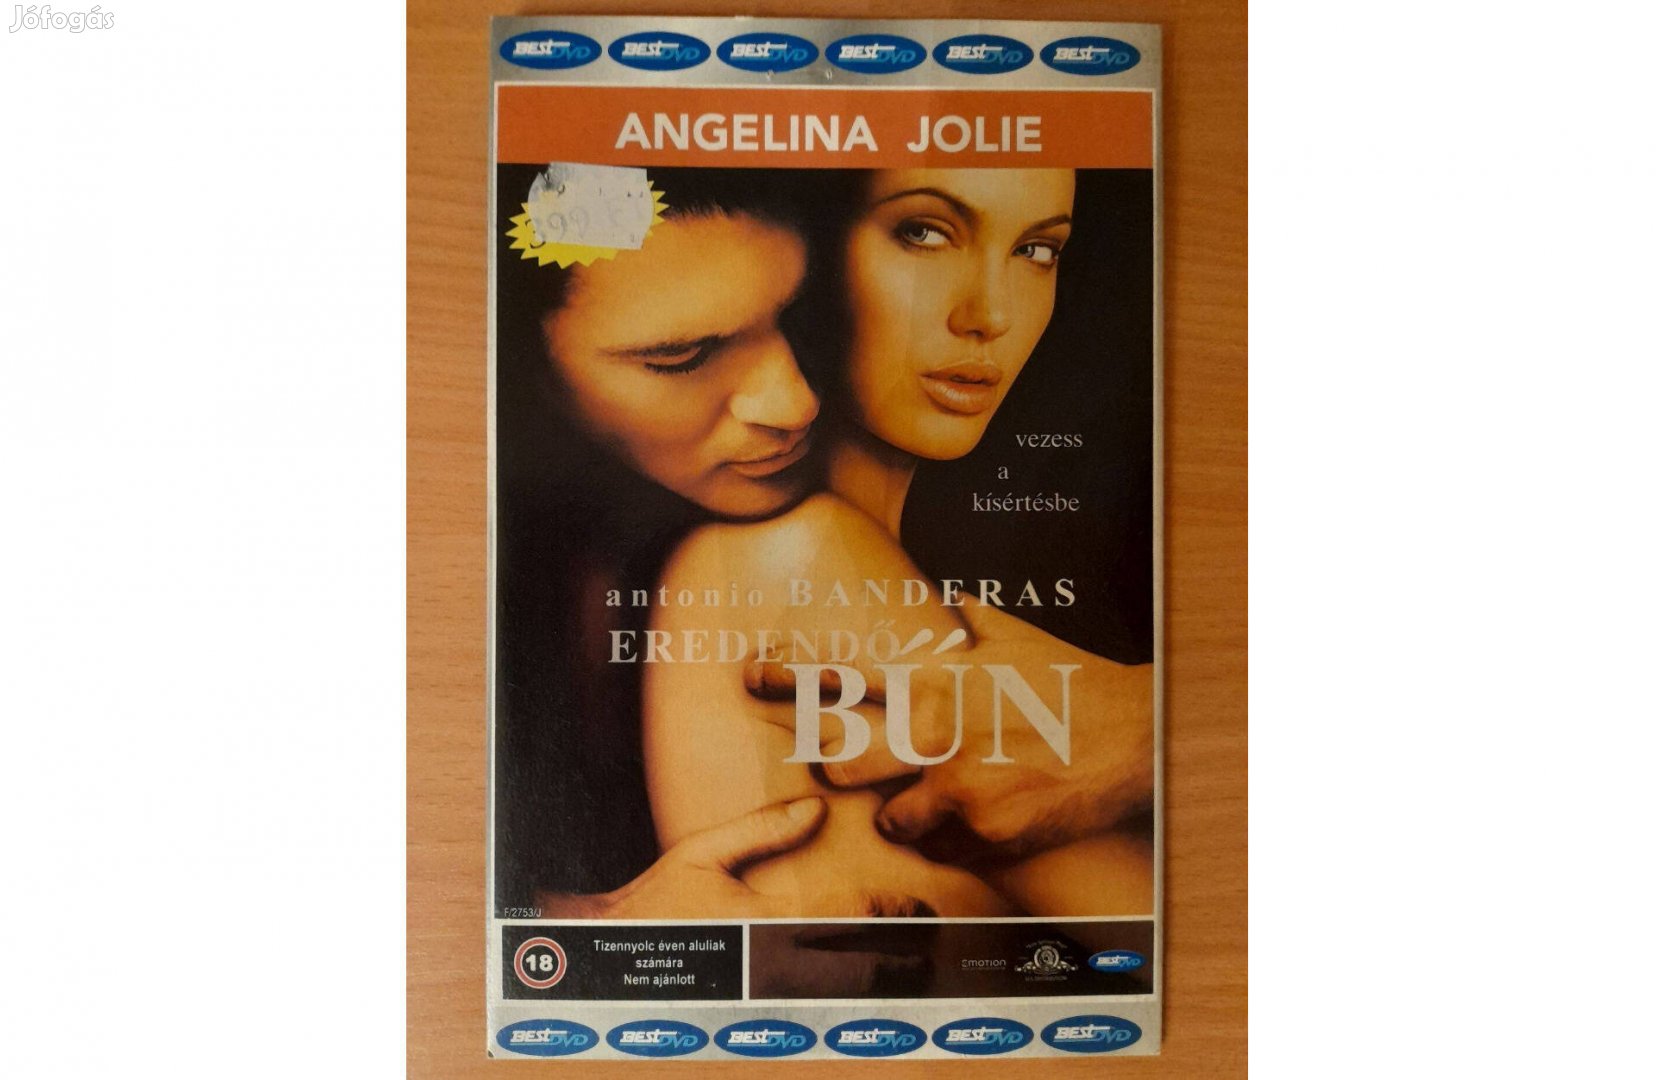 Angelina Jolie / Antonio Banderas Eredendő Bűn c. DVD eladó